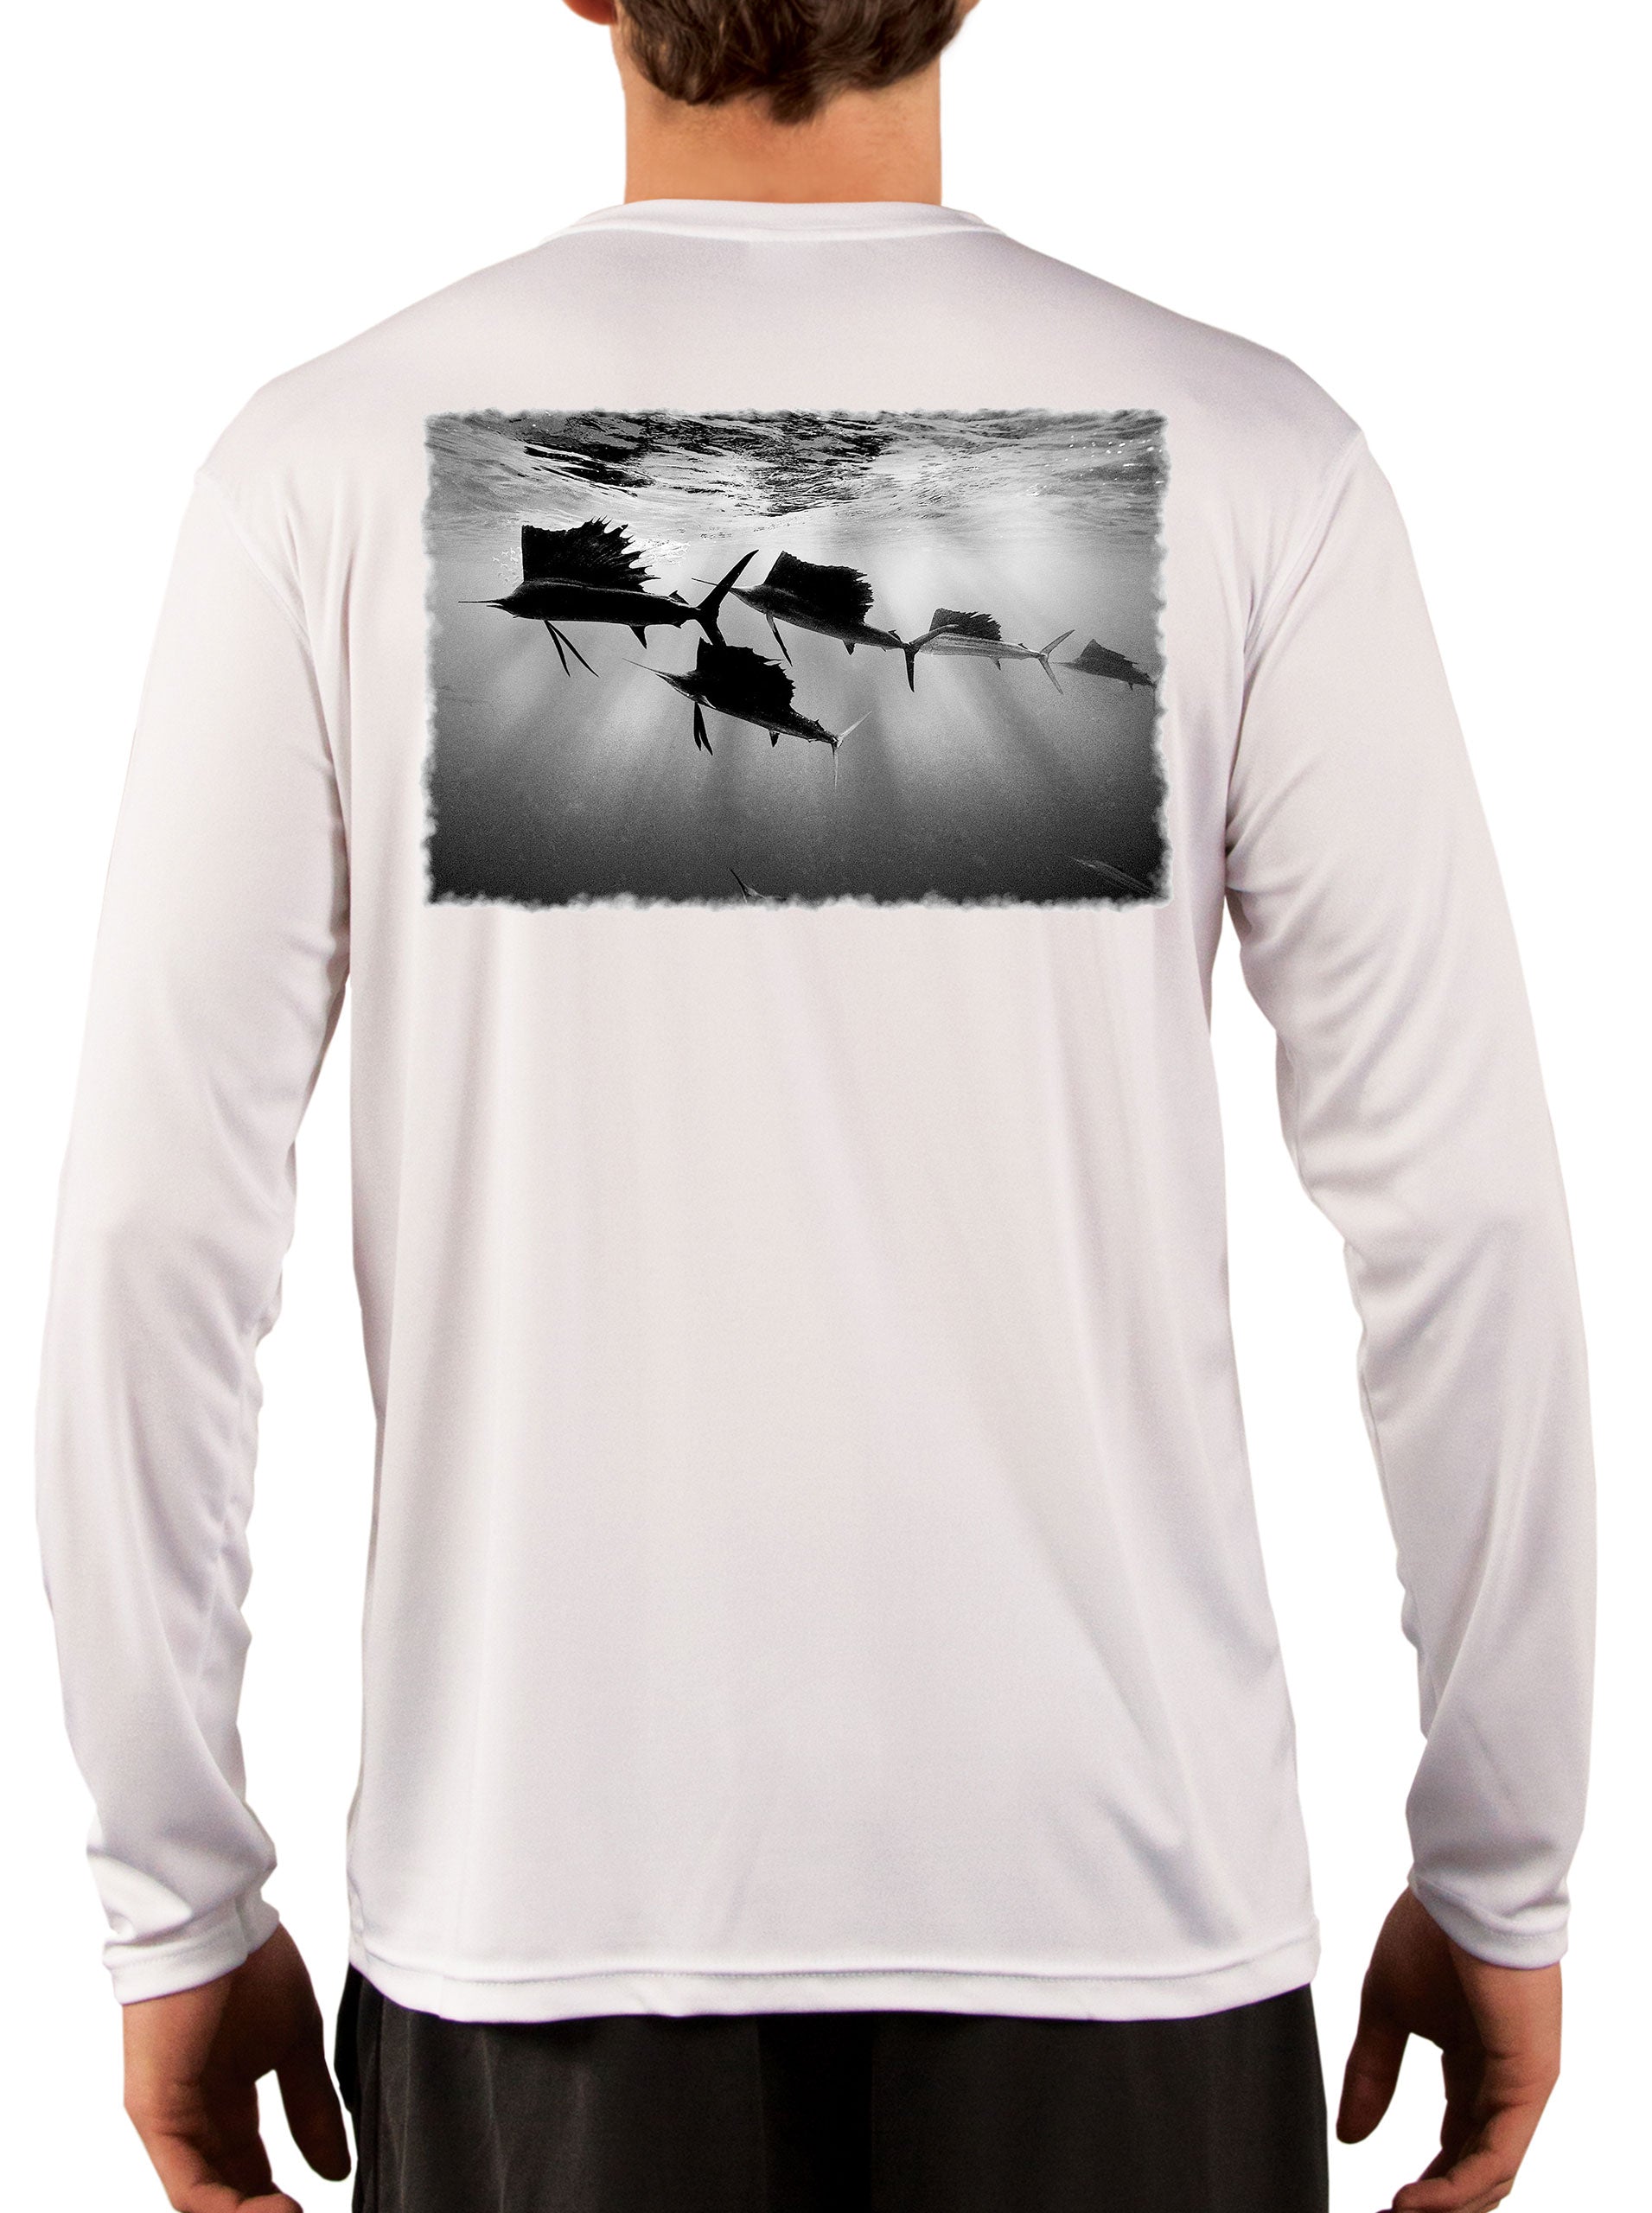 Pat Ford Sailfish Vignette Fishing Shirt